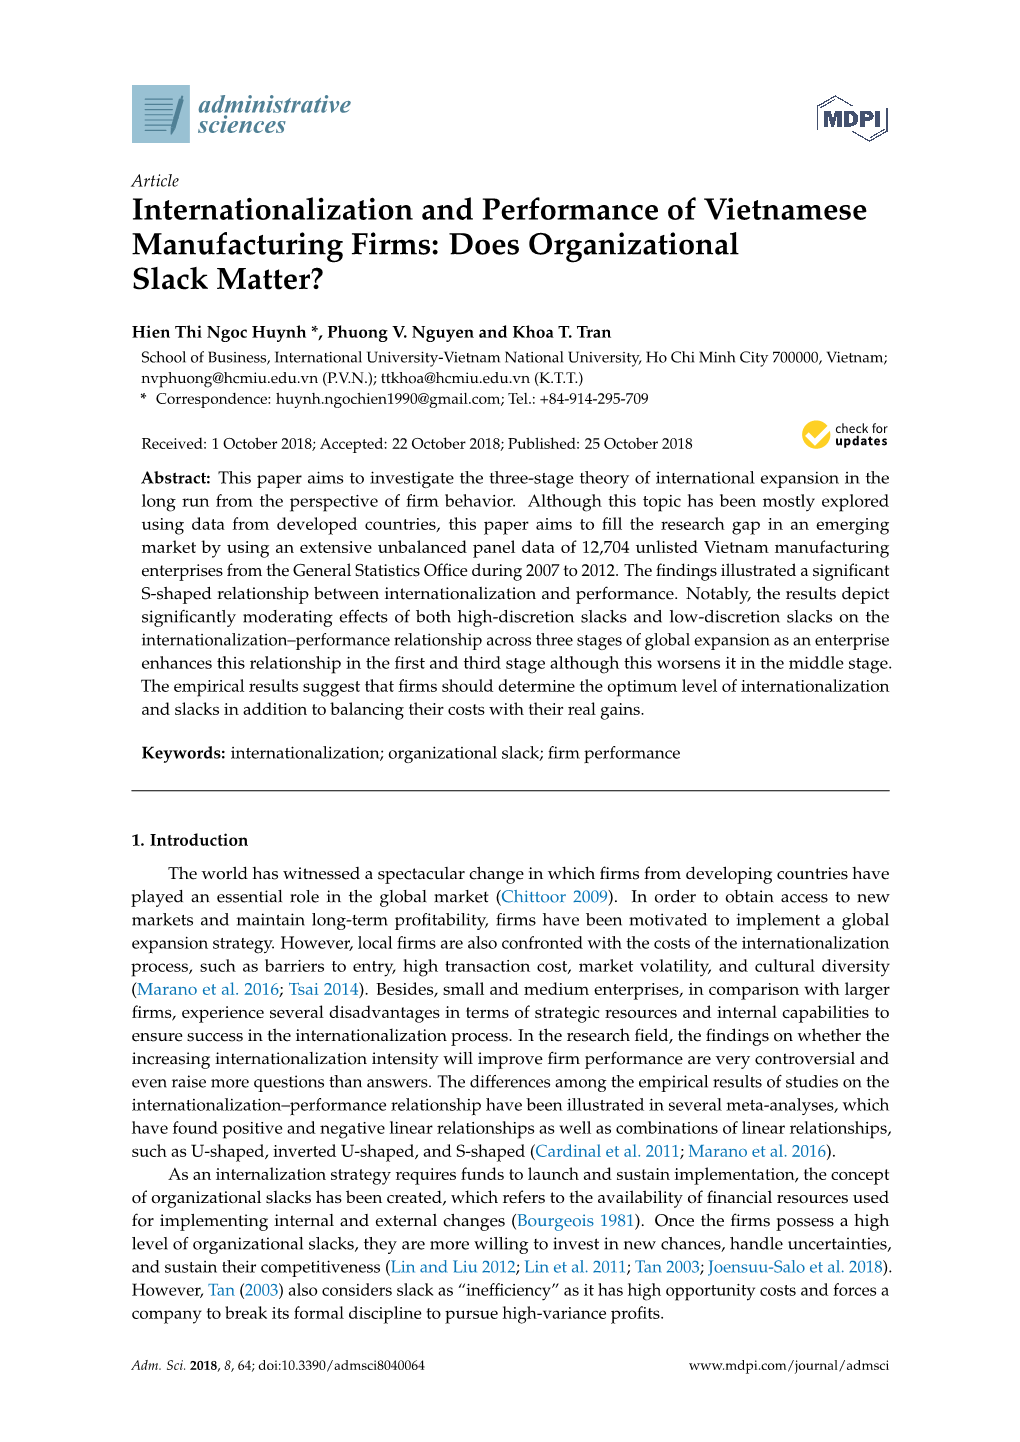 Internationalization and Performance of Vietnamese Manufacturing Firms: Does Organizational Slack Matter?